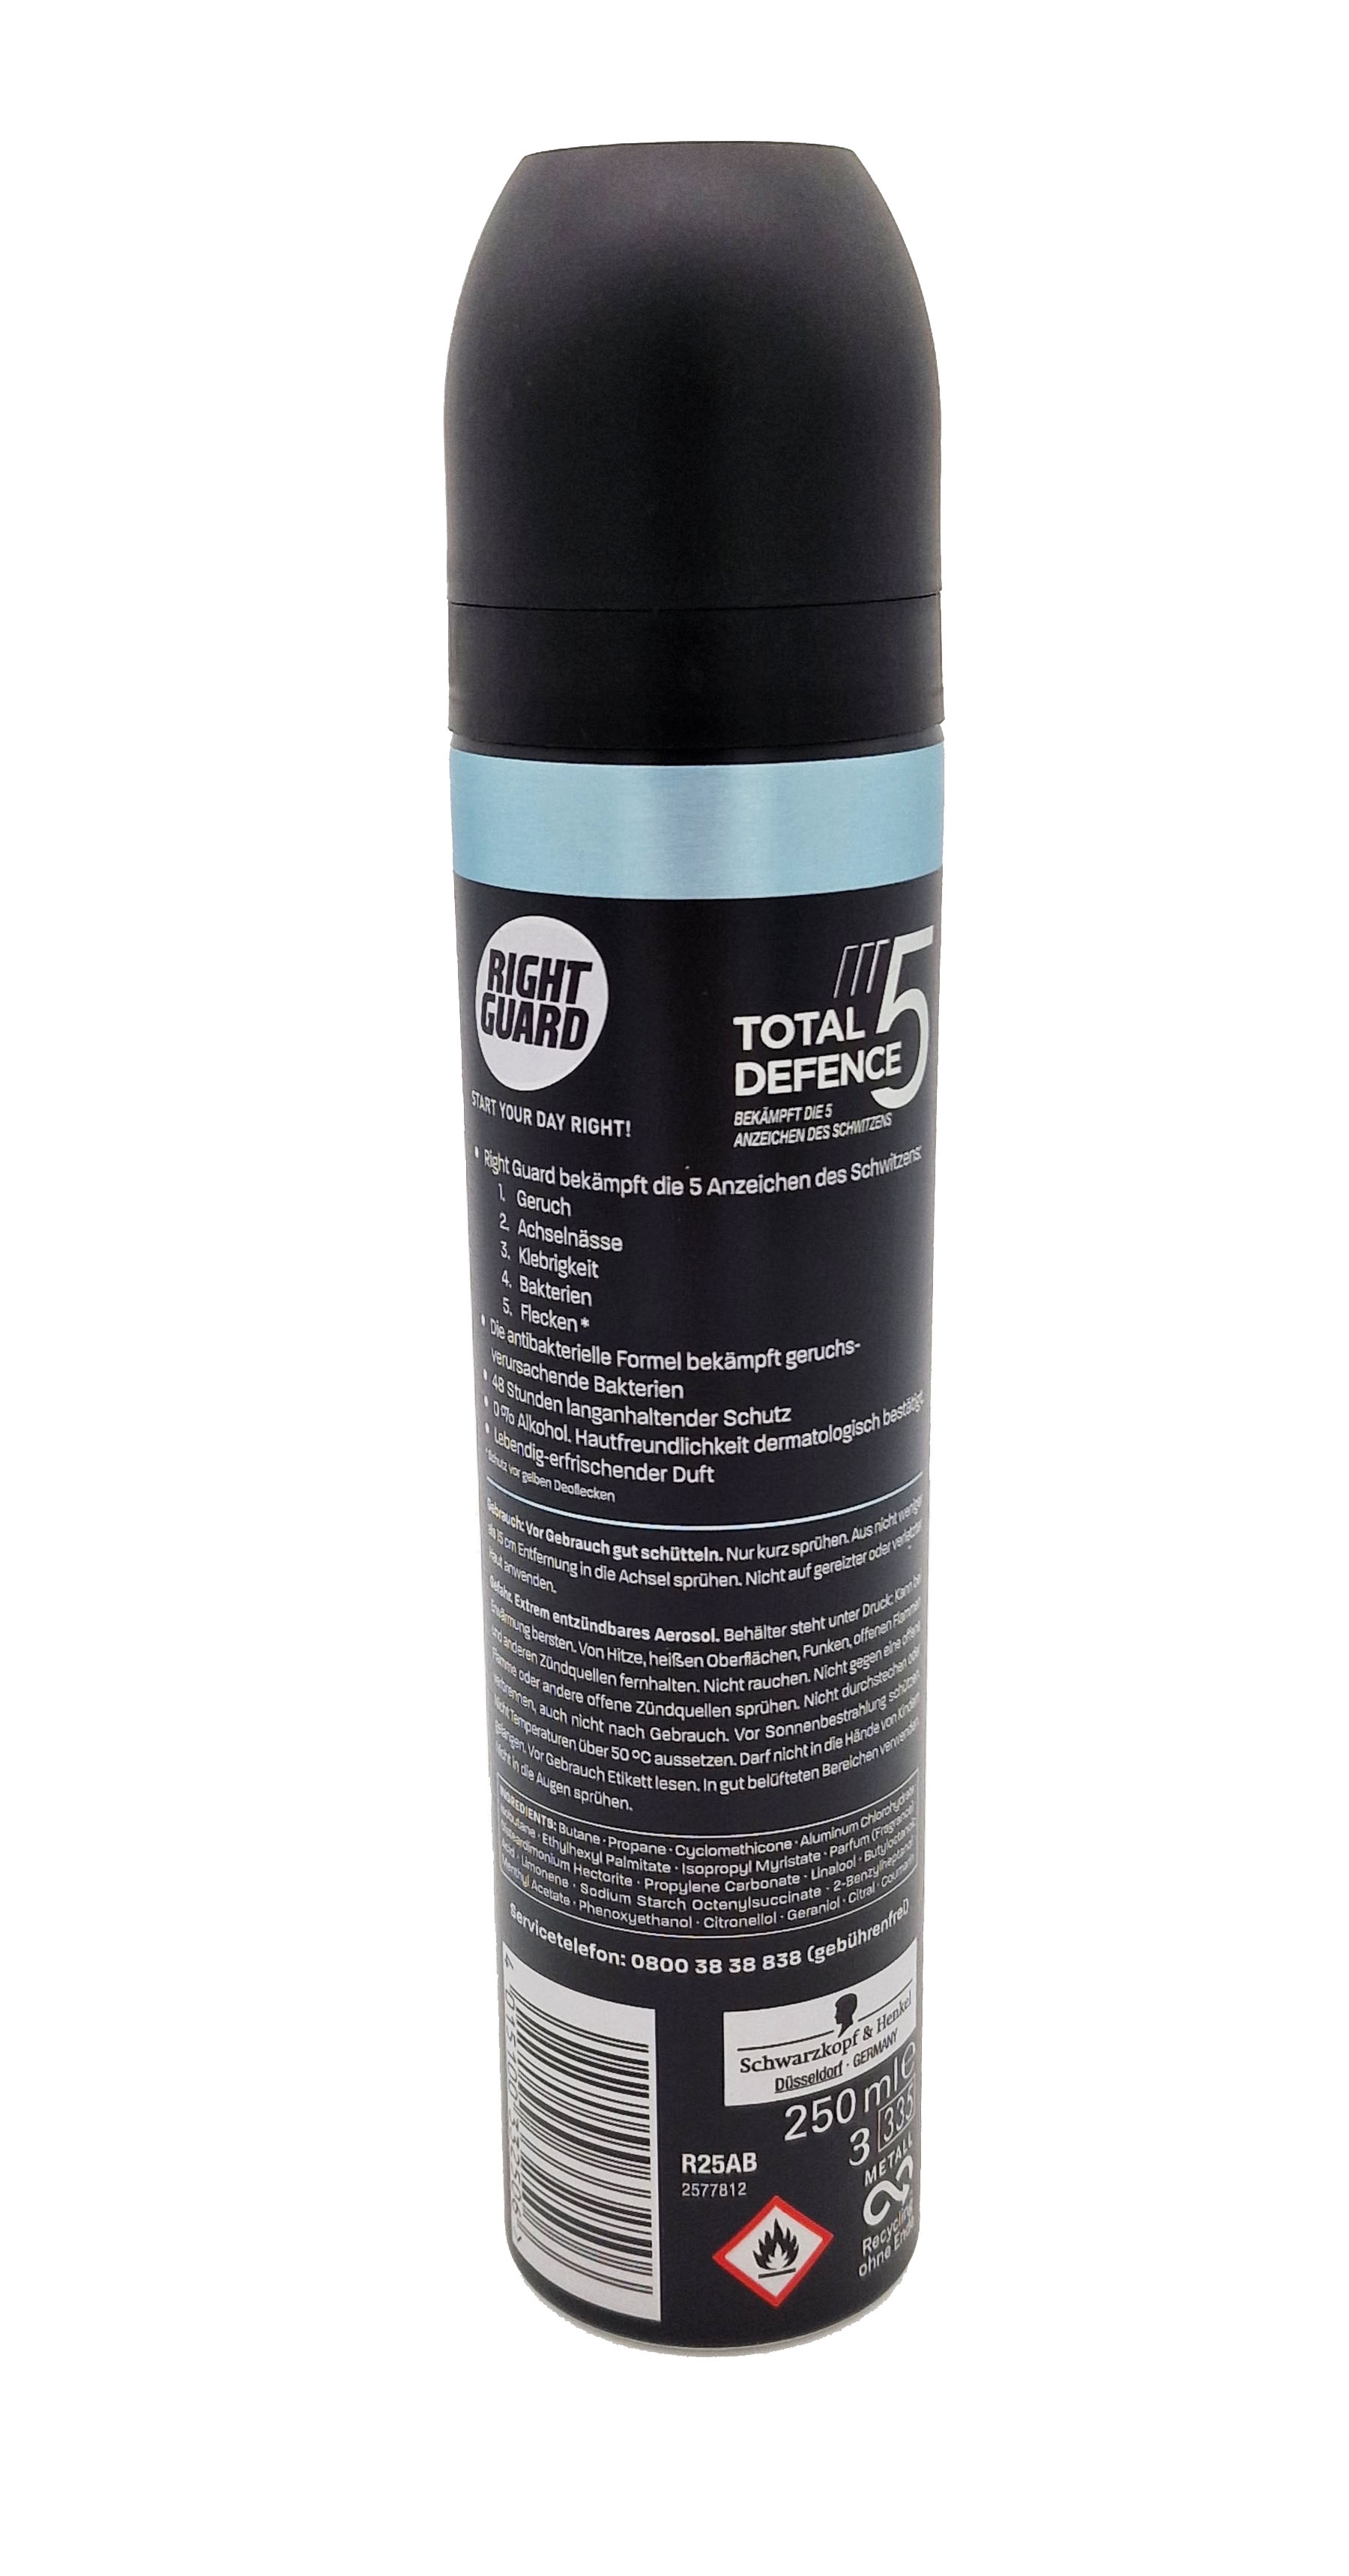 Right Guard Anti-Transpirant Spray Ultimate 250ml XL